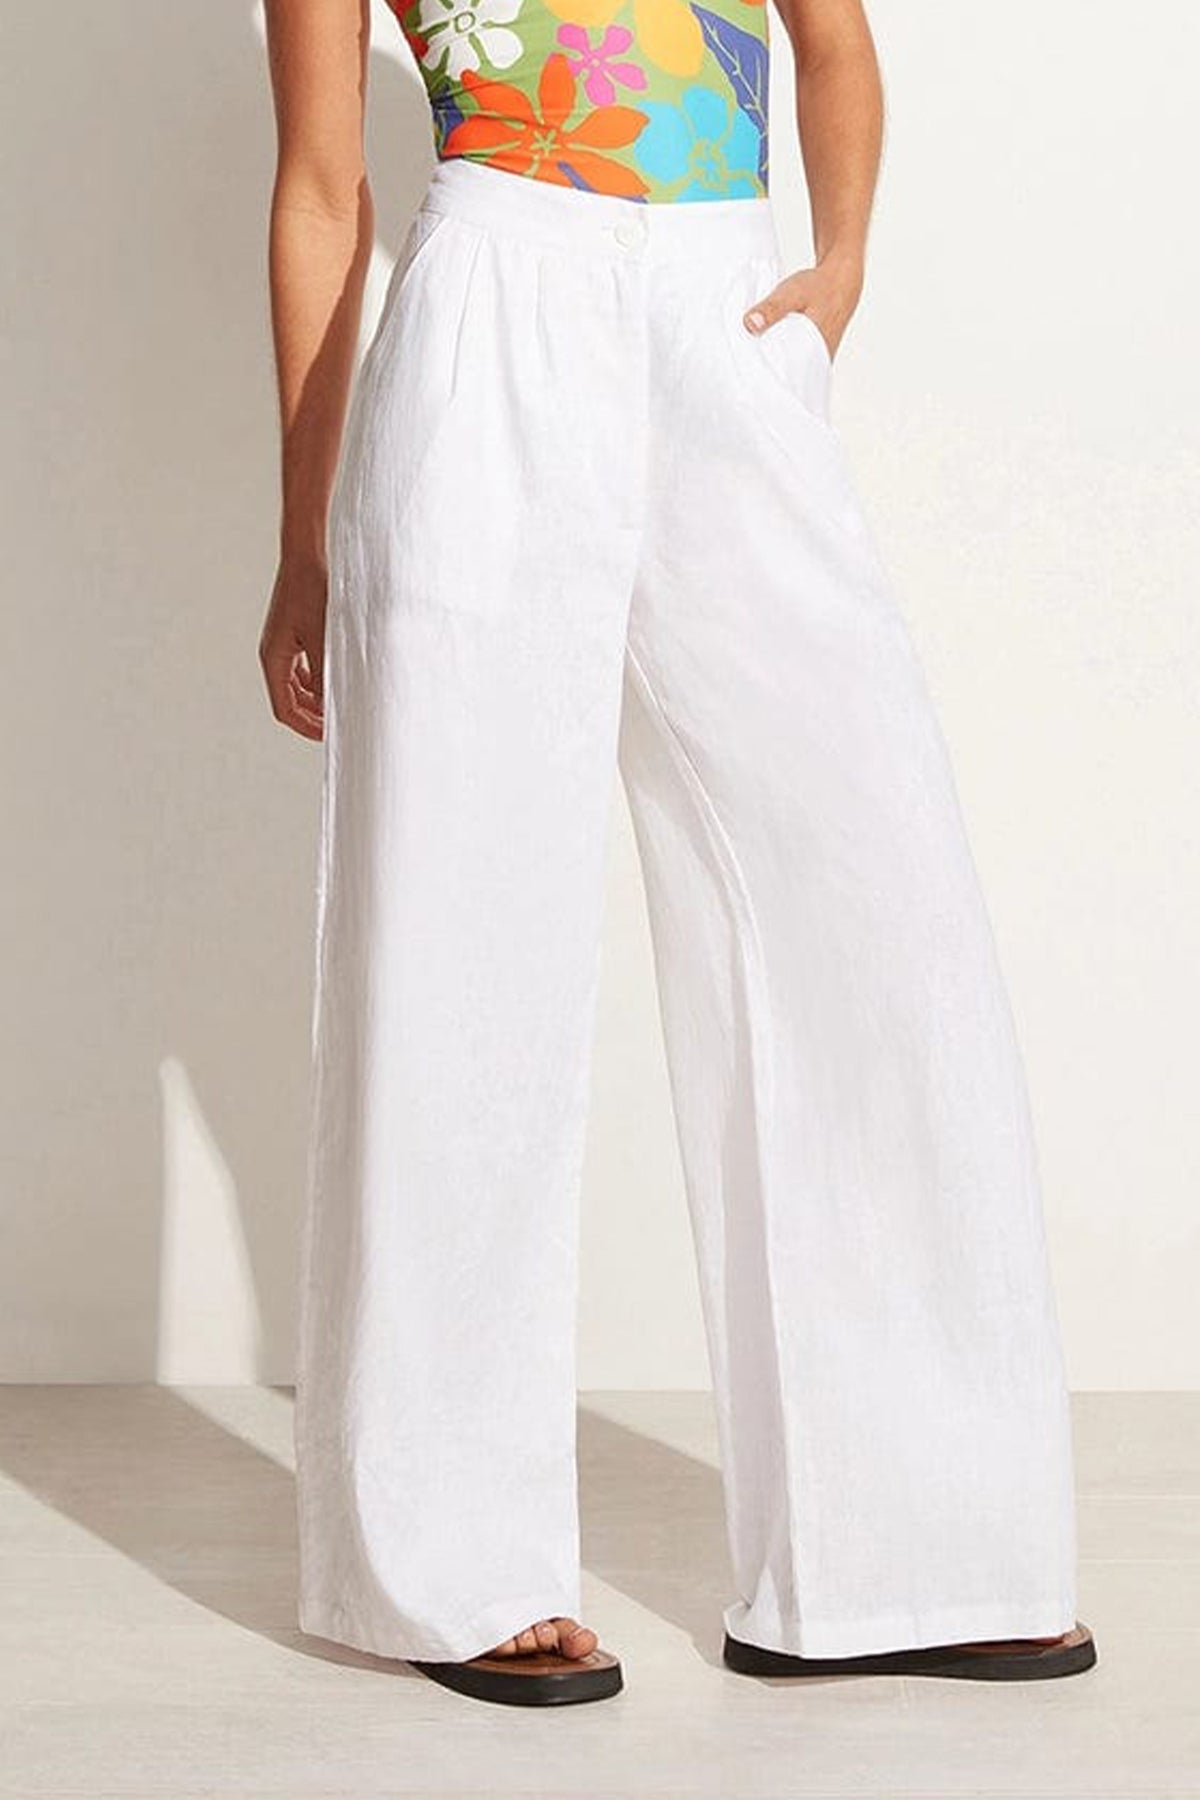 Circa Pants in White - shop-olivia.com